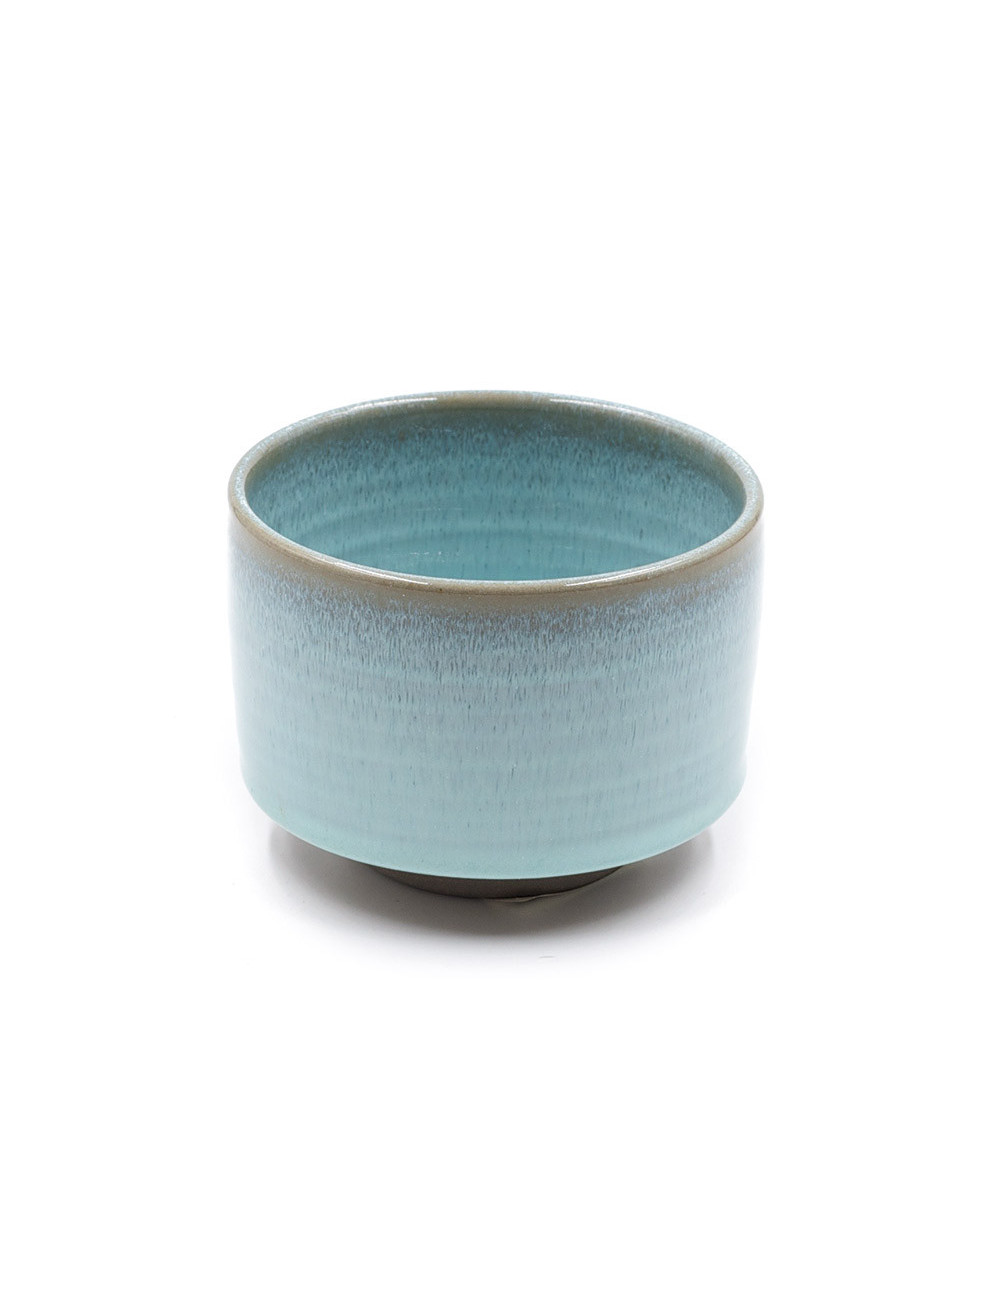 Chawan matcha artigianale in ceramica giapponese azzurra Natsu - La Pianta del Tè shop online